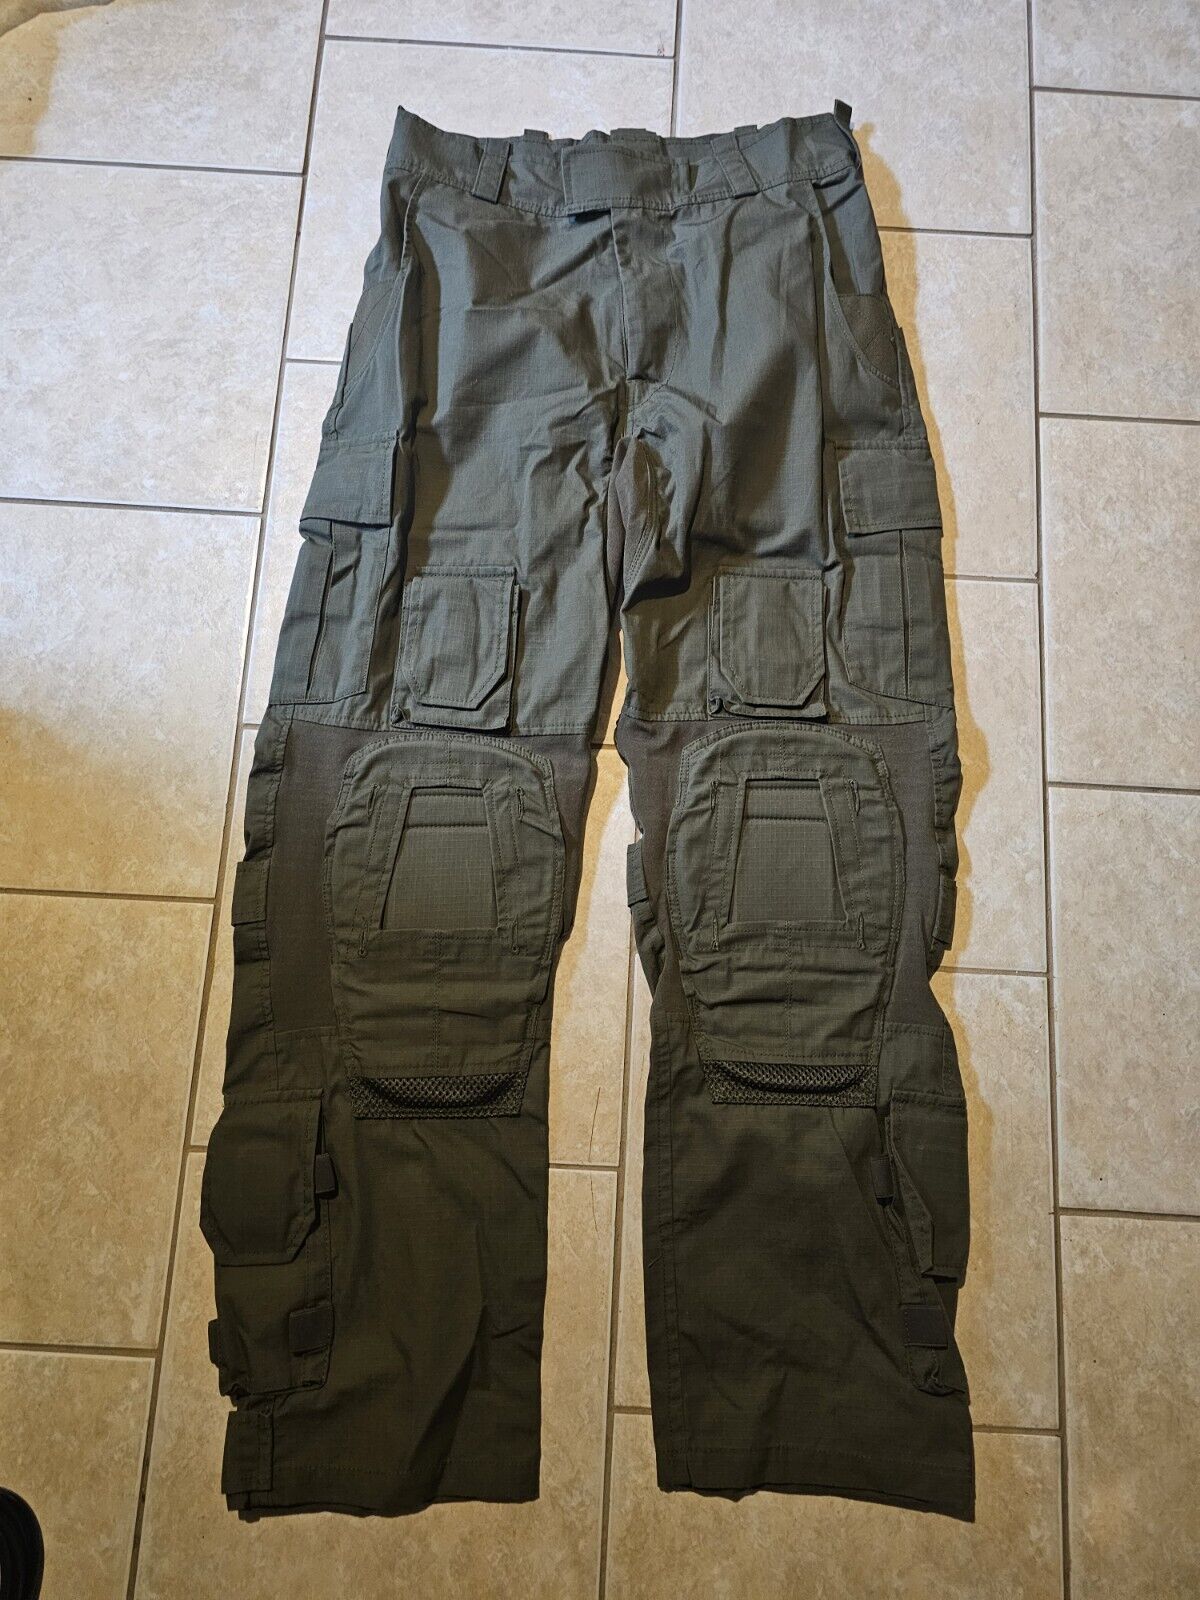 Arktis C222 Ranger Trousers Ranger Green Combat Pants 32x33 